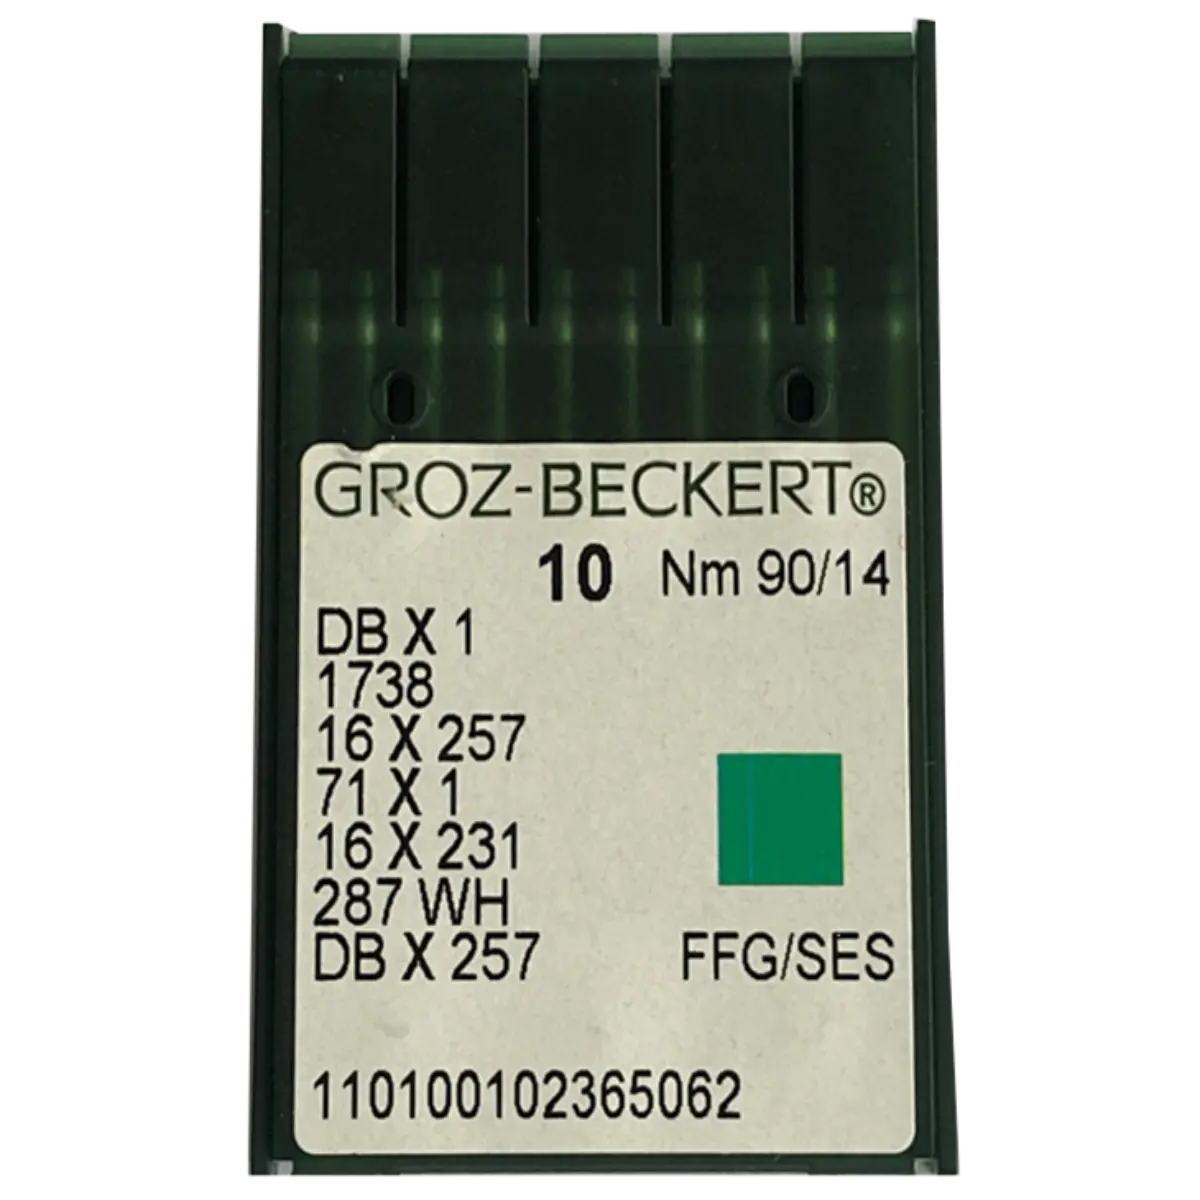 Quality Groz-Beckert industrial sewing needles 1738A, 16x231, DBx1, 16x257 Size 90